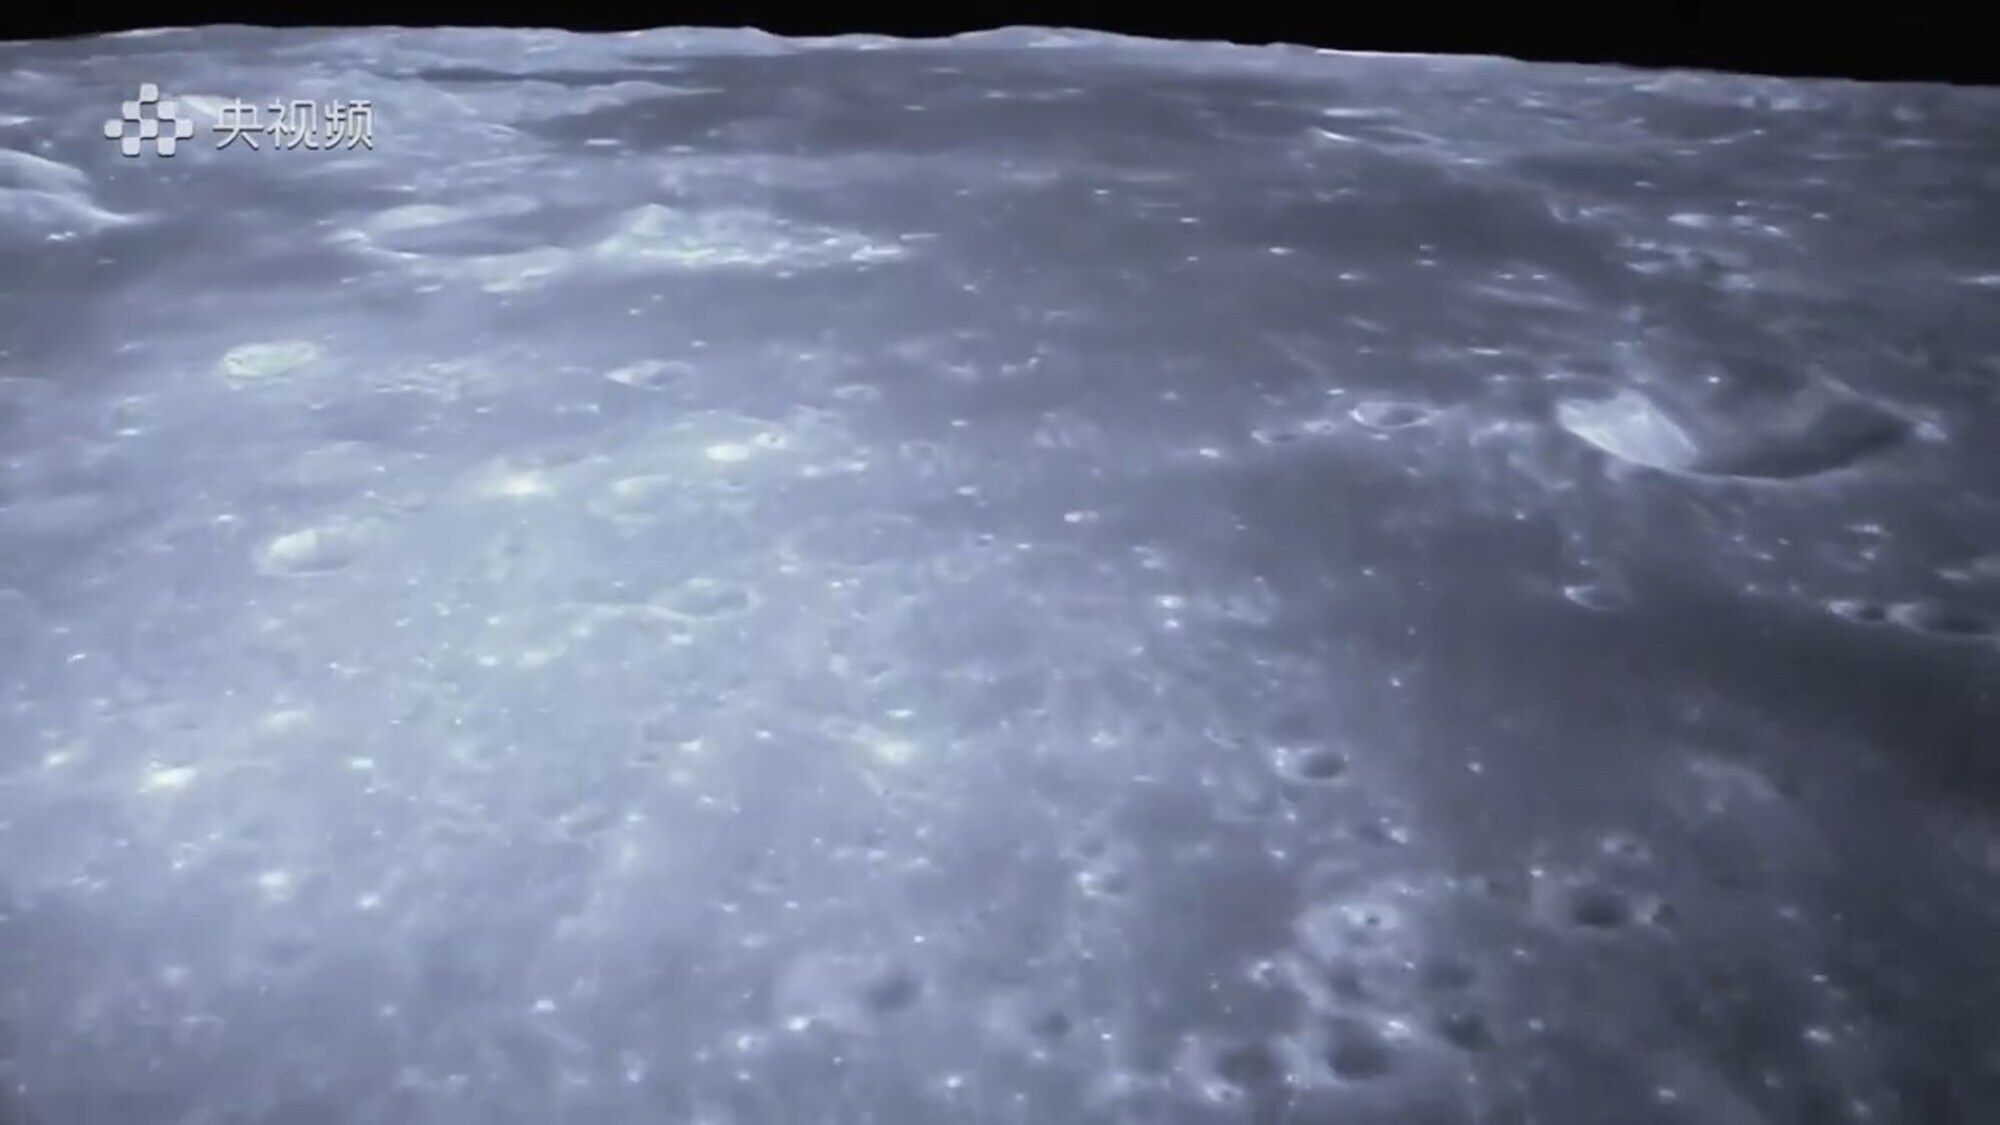 Imágenes inéditas del aterrizaje de la sonda china Chang’e 6 en el lado oculto de la Luna